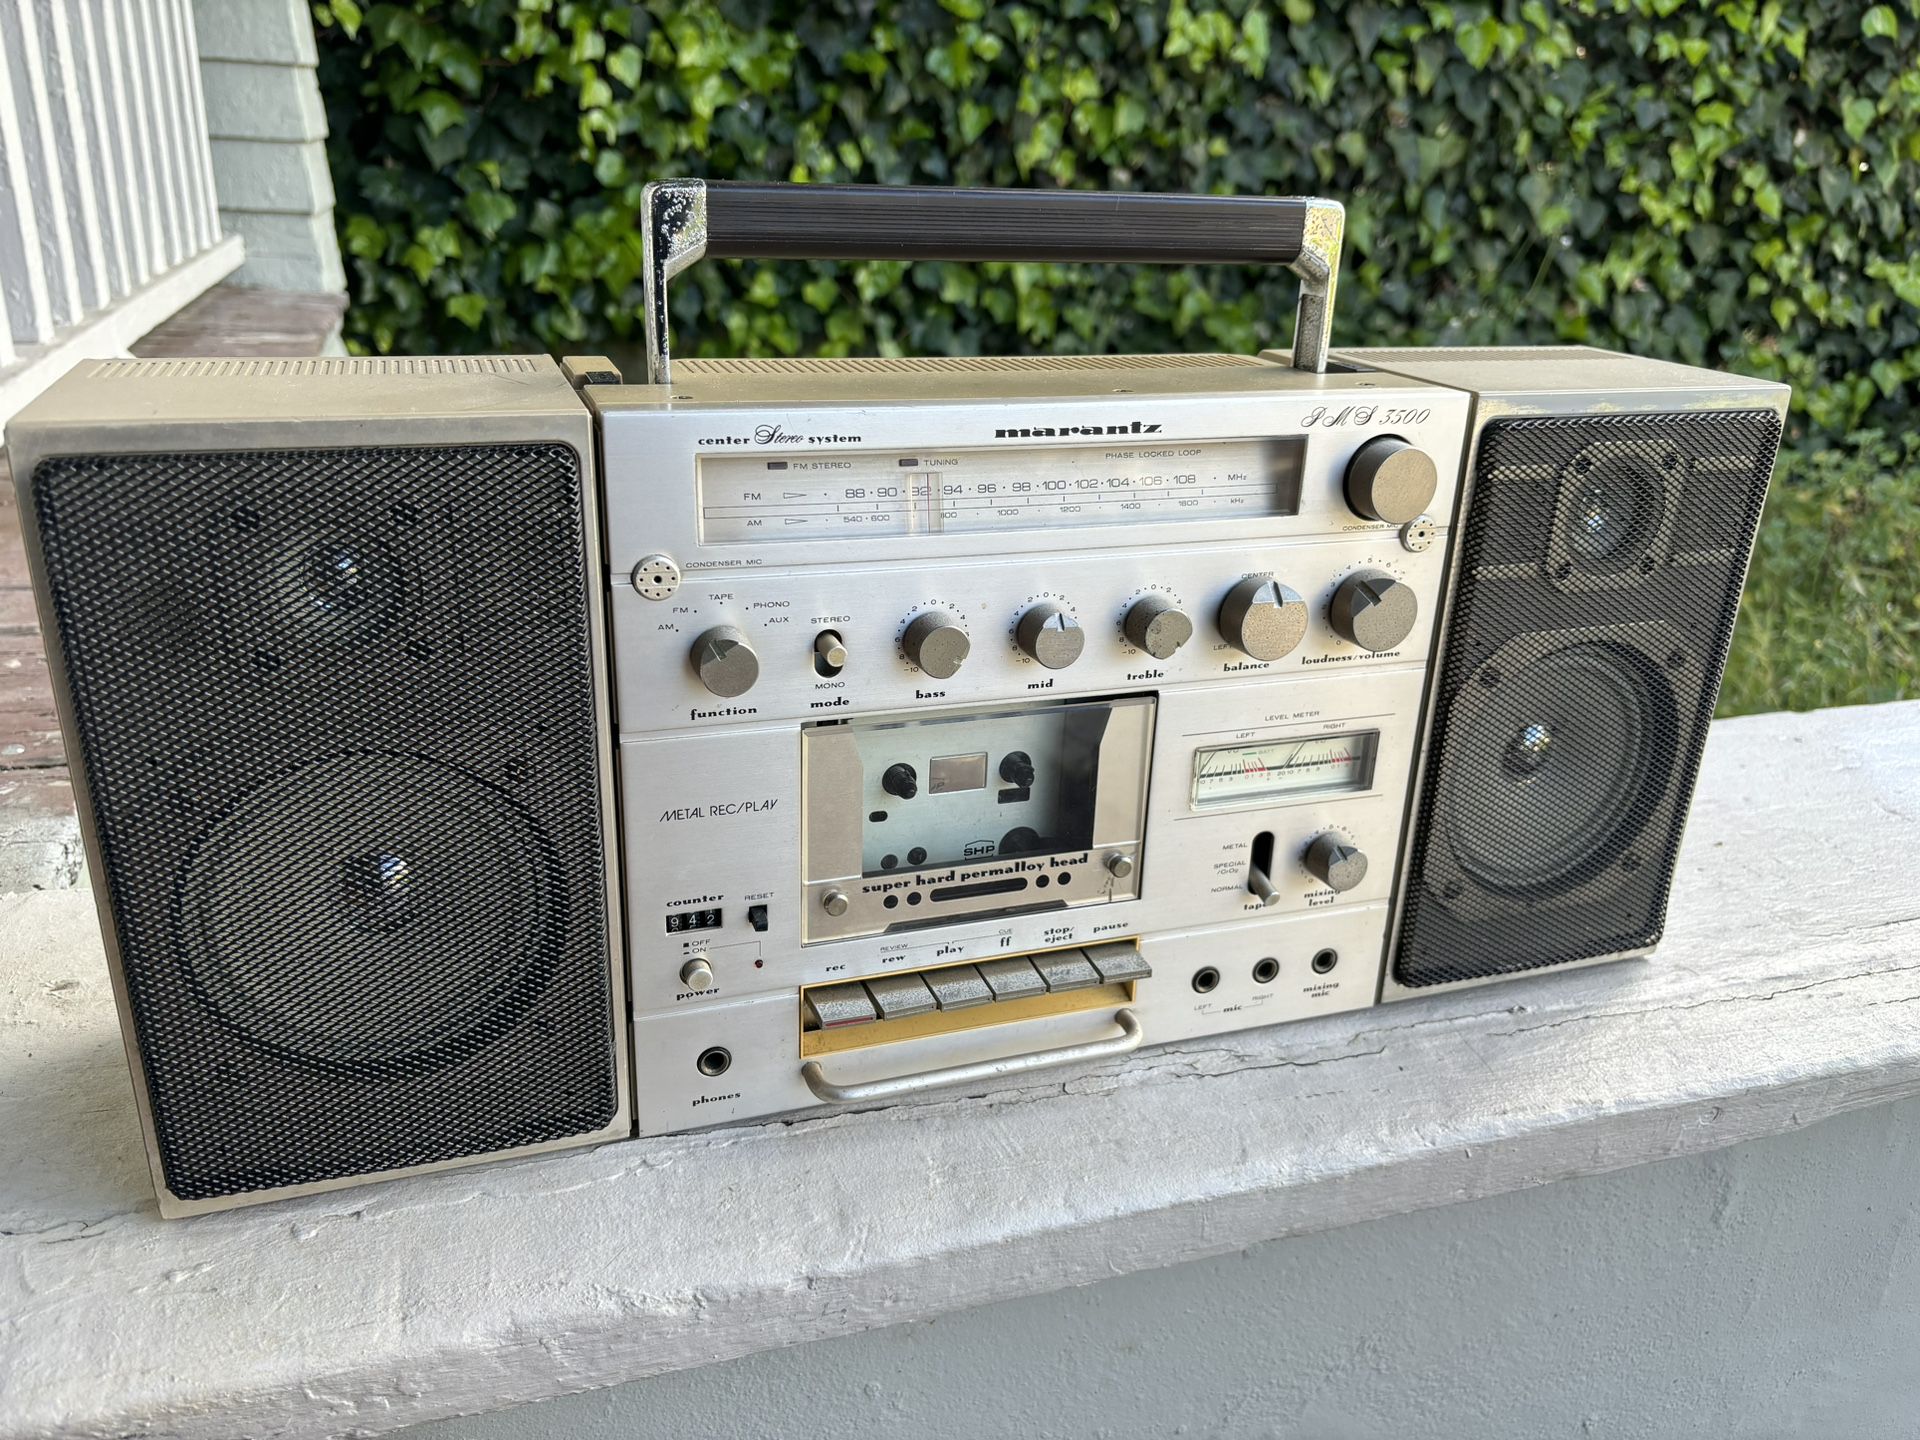 Marantz PMS-3500 Rare Boombox Radio Boom Box Ghetto Blaster Ghettoblaster Cassette Tape Player